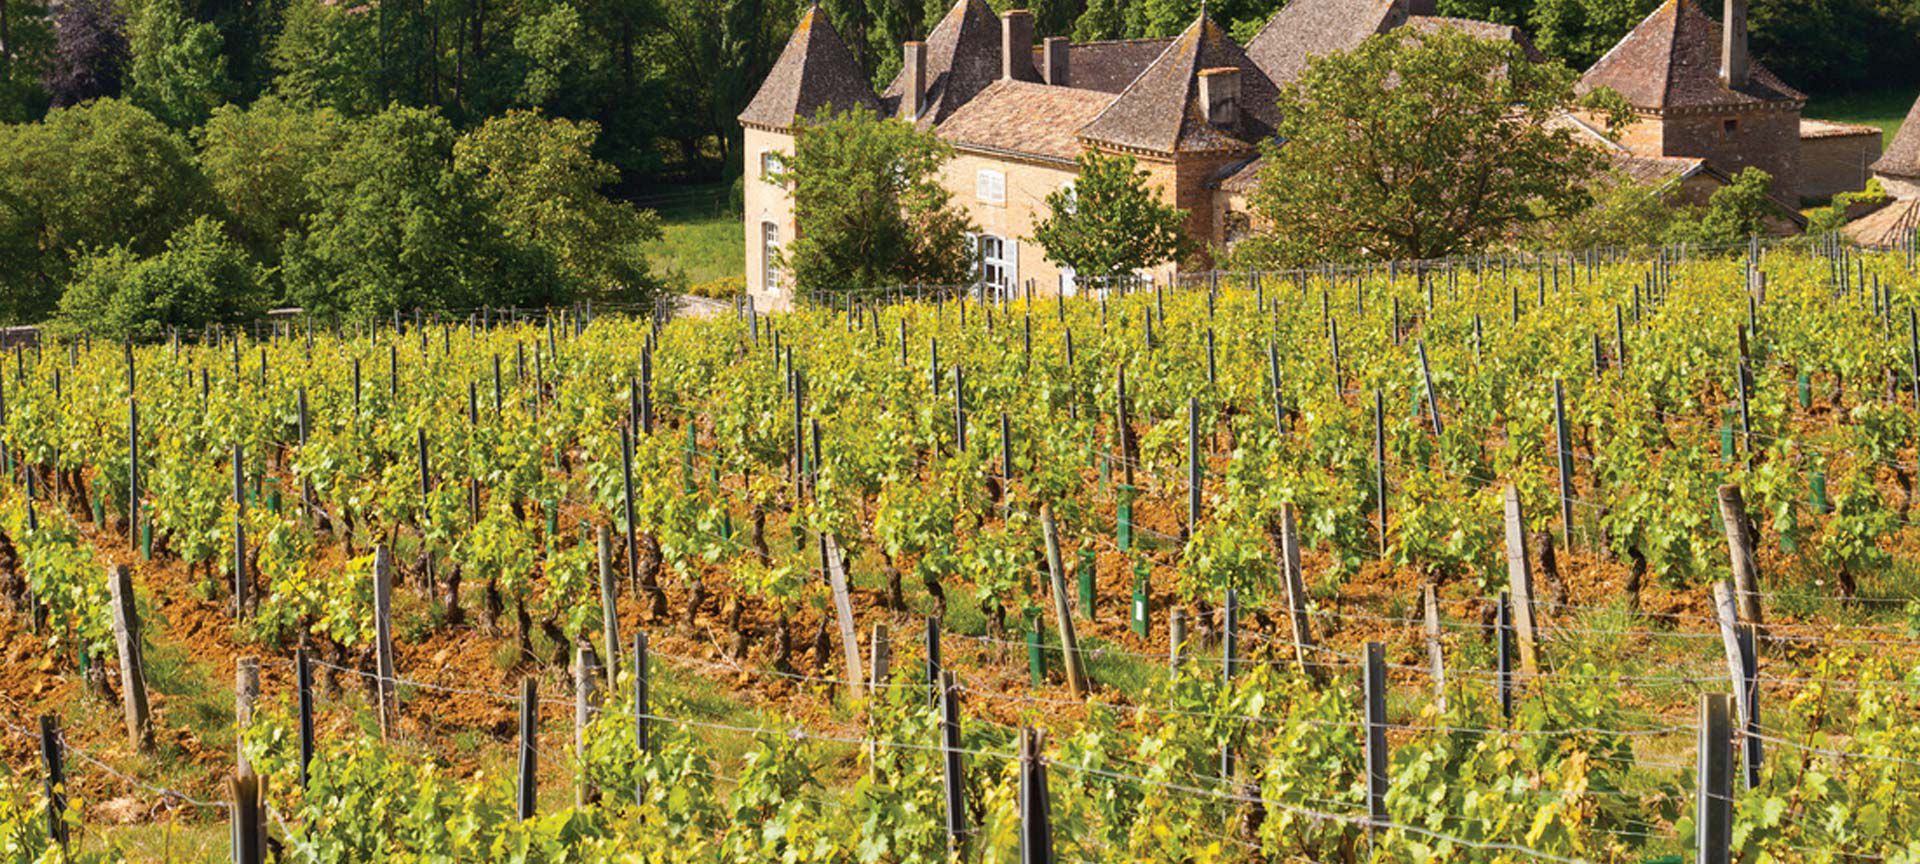  Palatinate wine region 